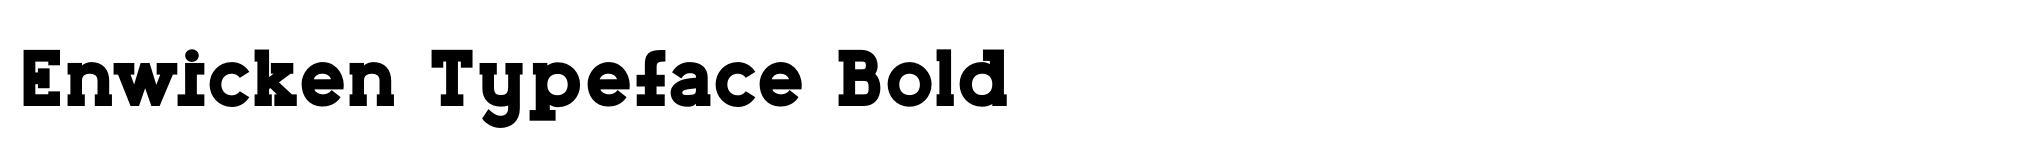 Enwicken Typeface Bold image